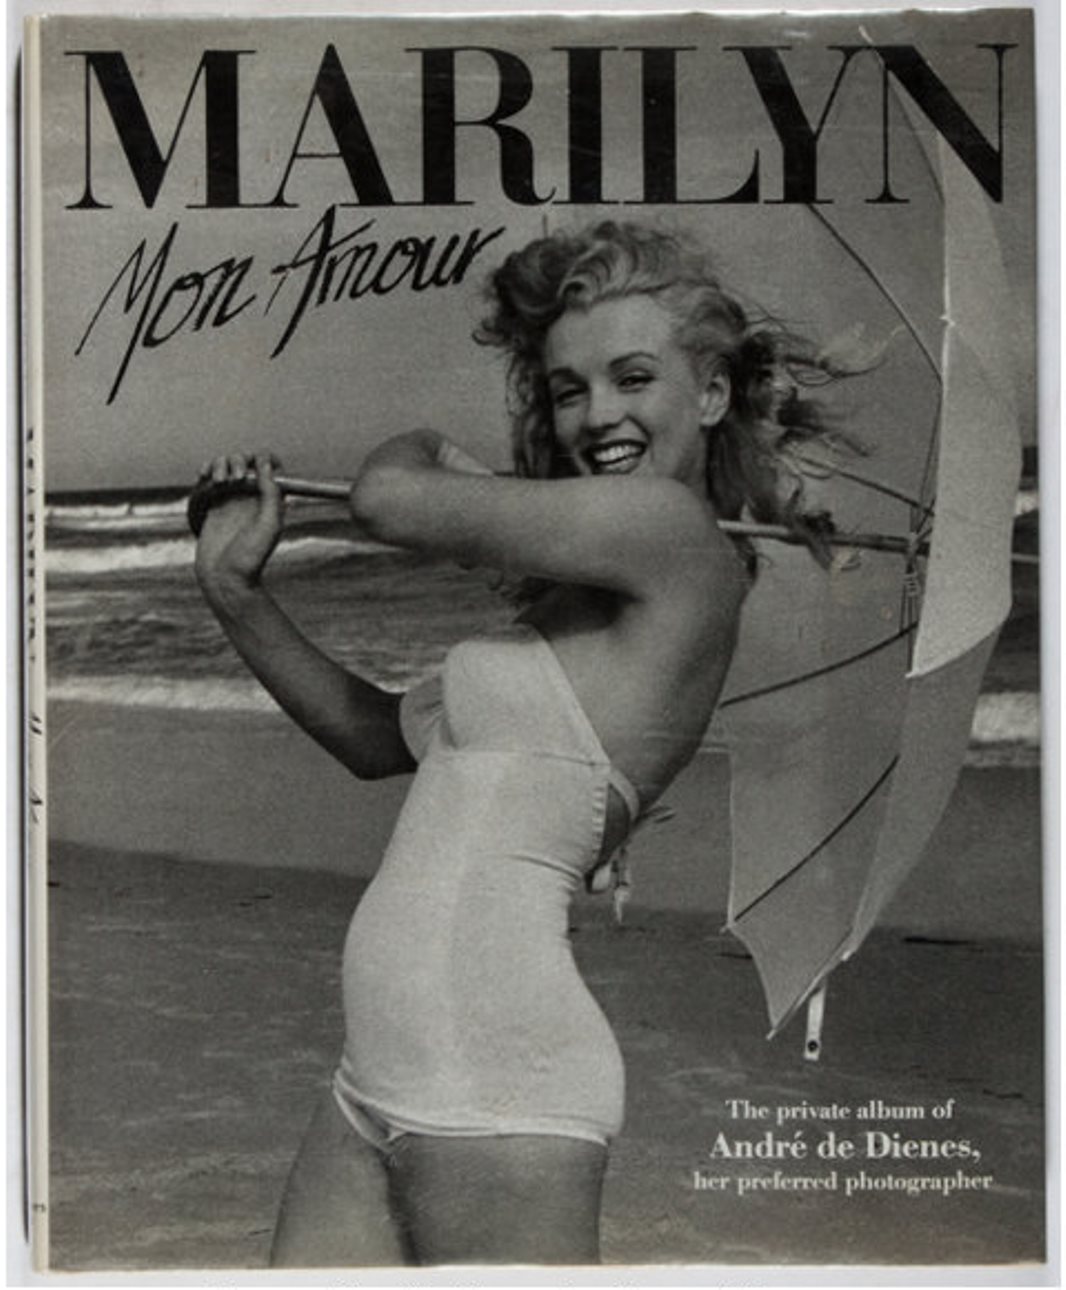 Marilyn Mon Amour